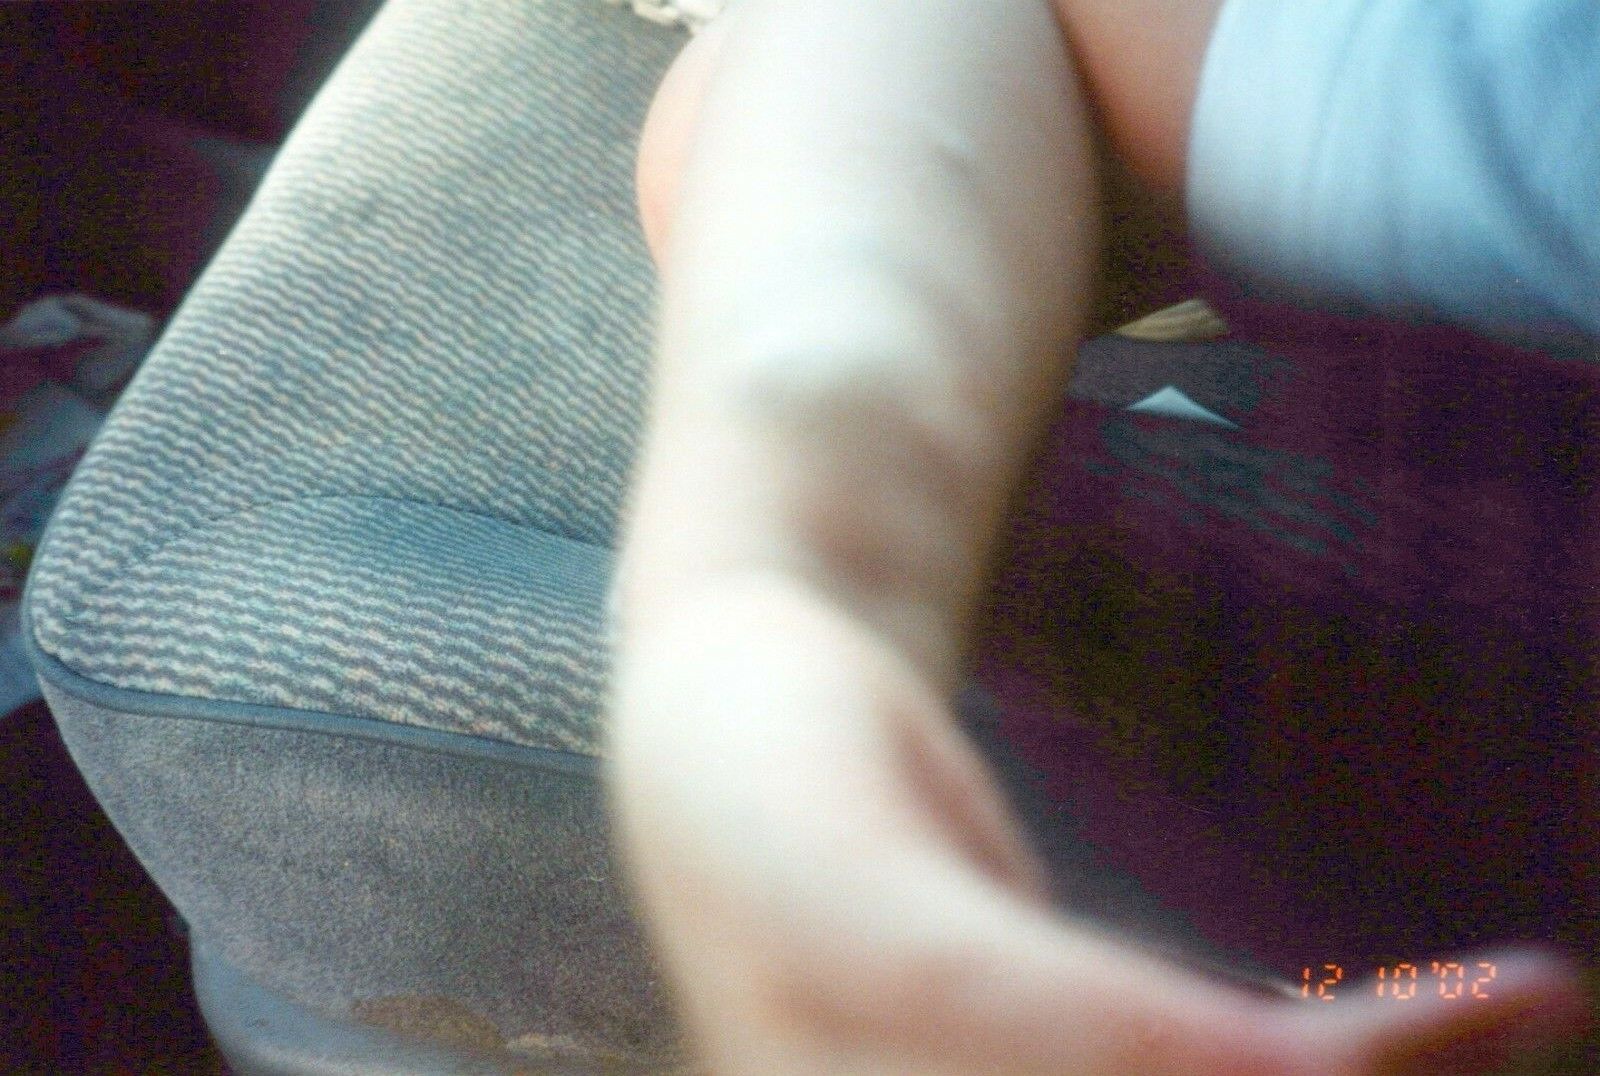 2000's Found Photo - Strange Weird Odd Picture Of Kids Arm With A Rash Disease